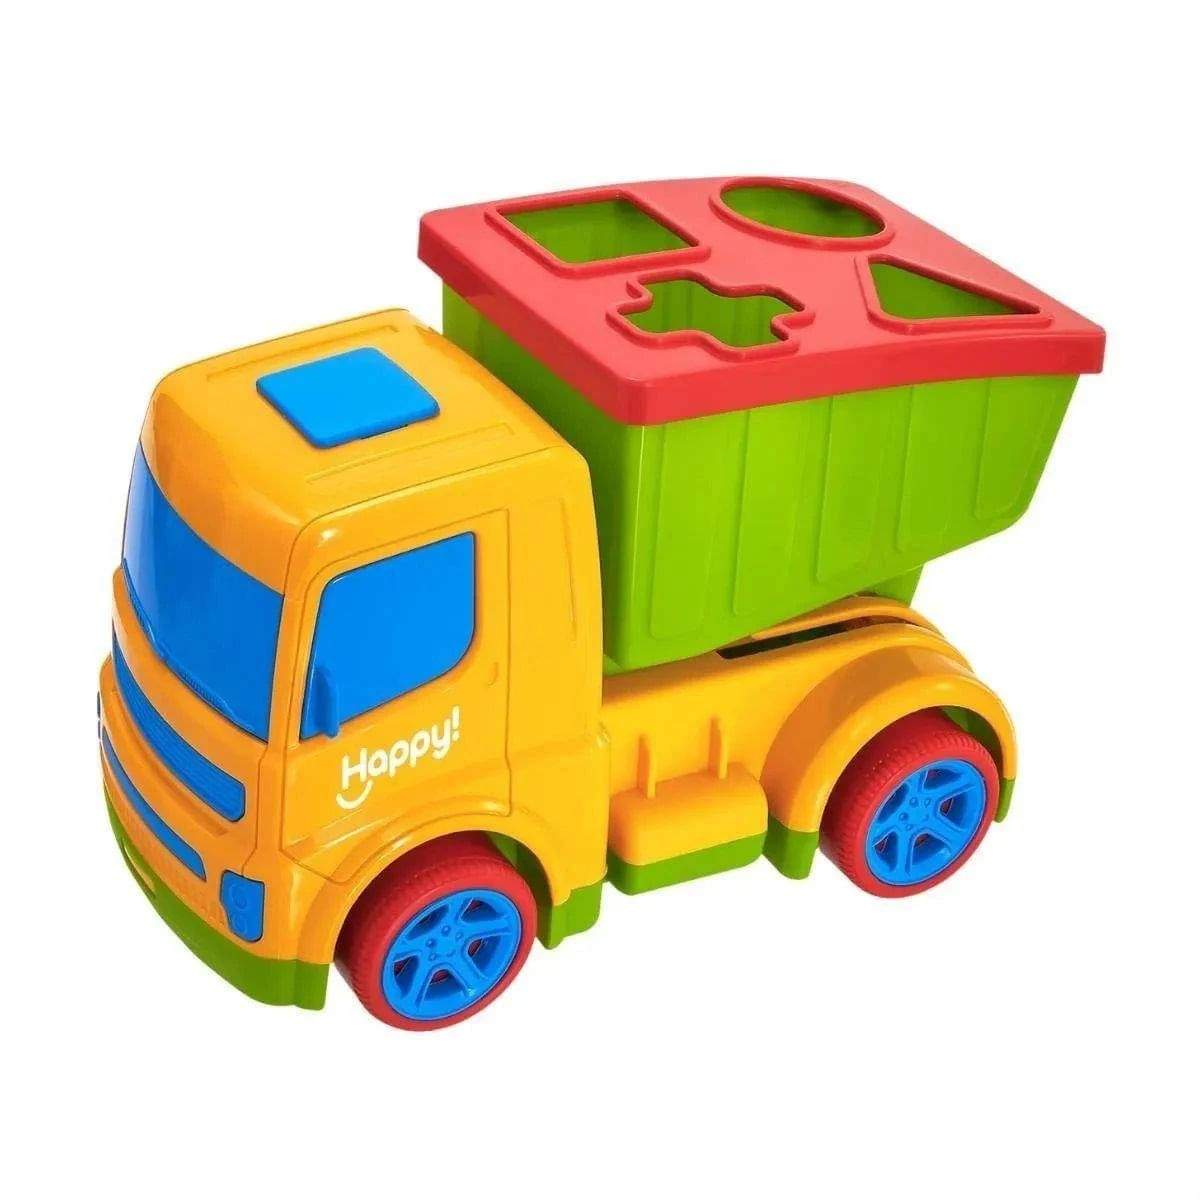 Kit Com 4 Motos de Brinquedo Corrida Miniatura Infantil para